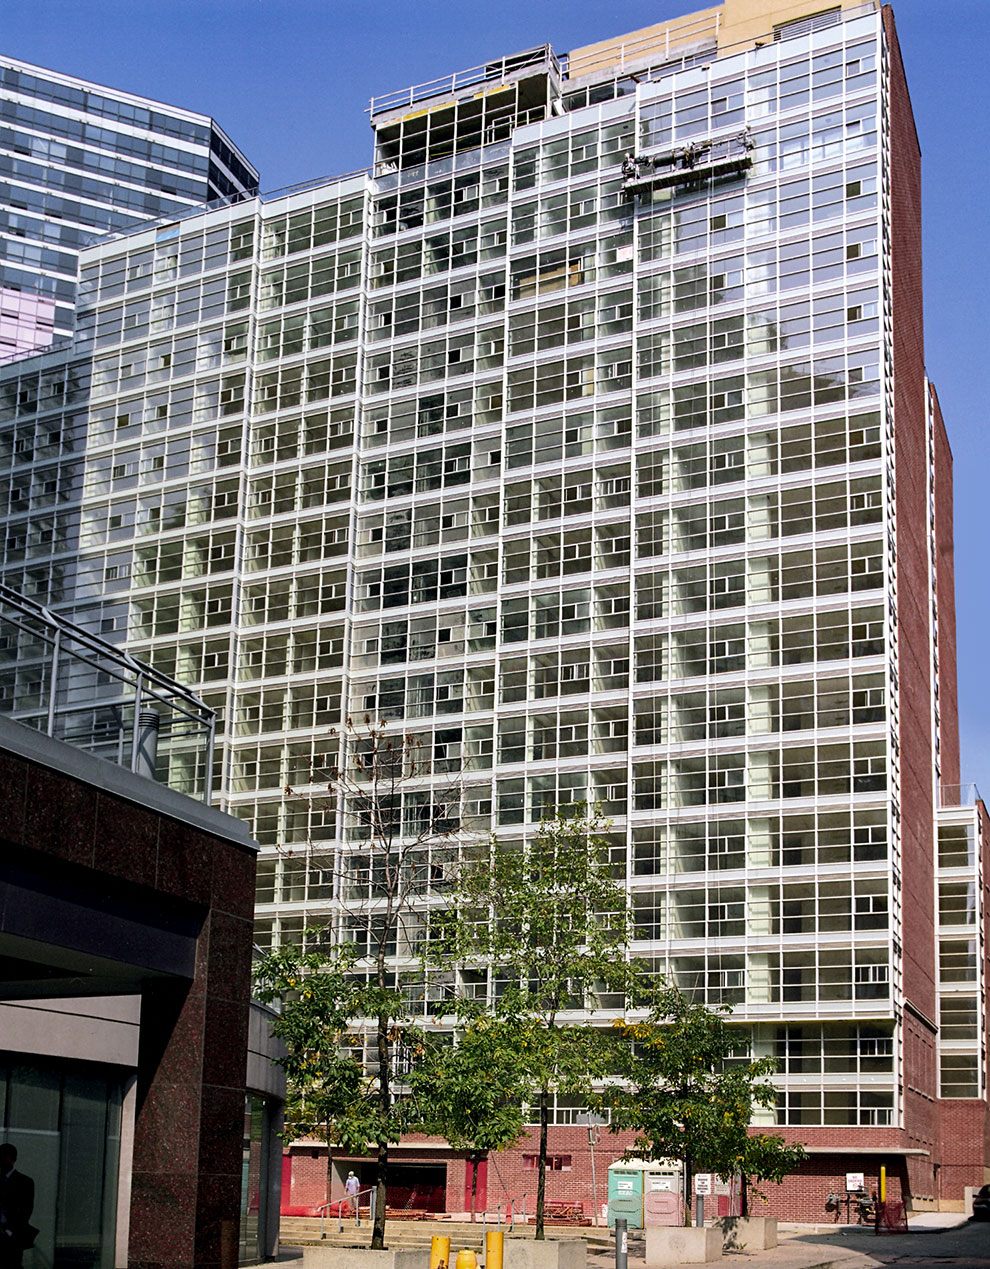 17 storey, 206 unit rental condominium with 4 levels of underground parking.